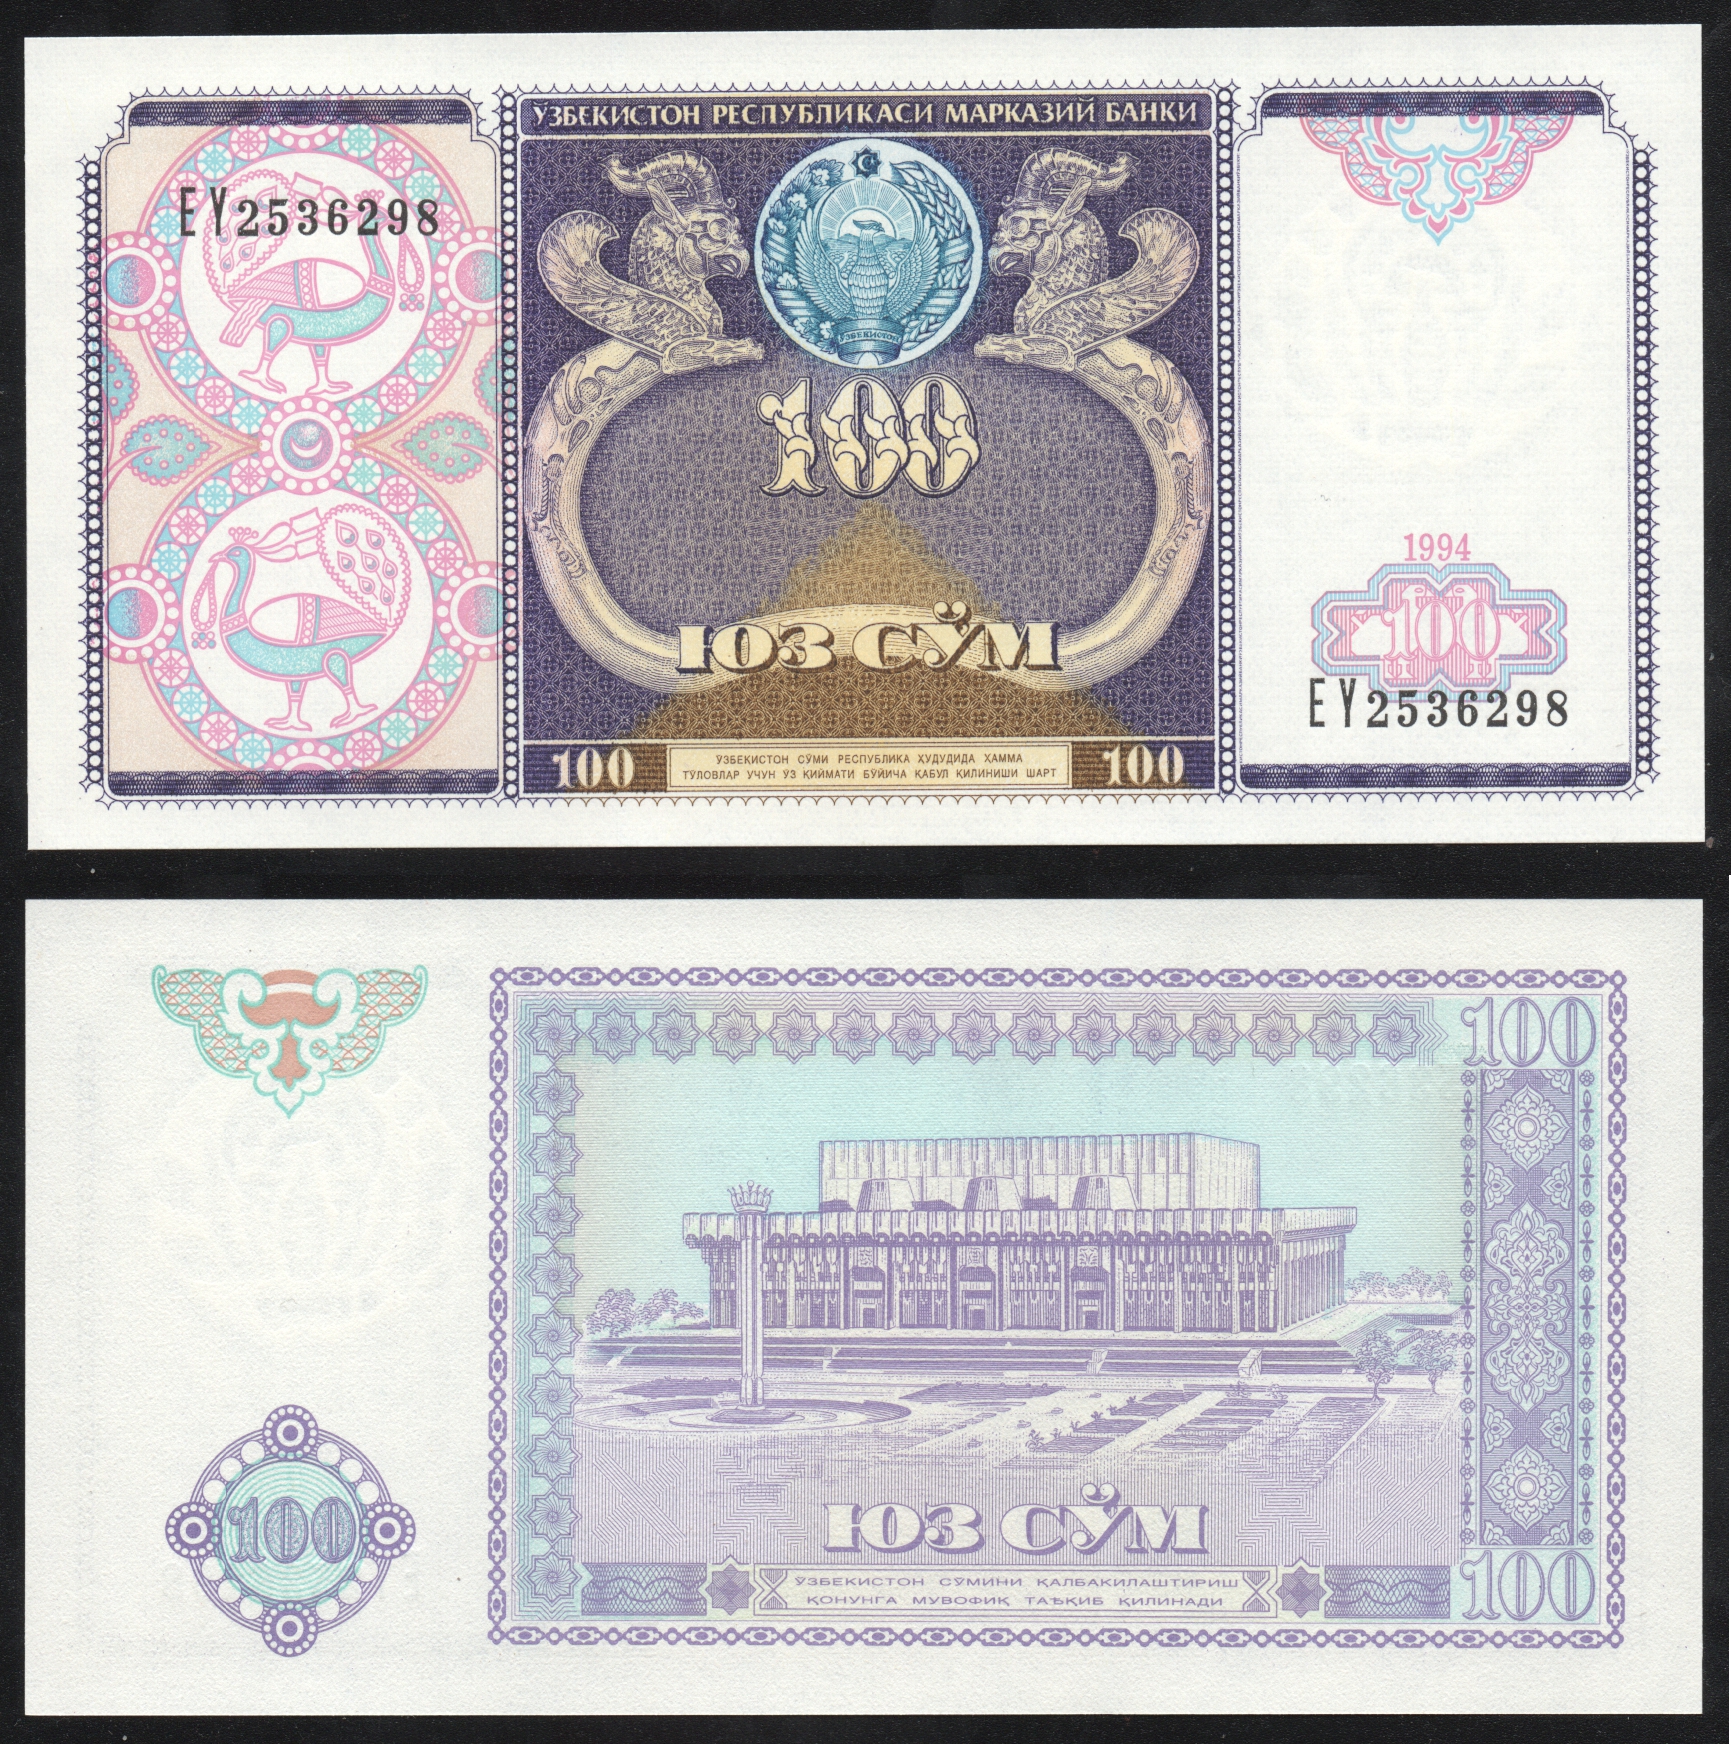 1 сумм узбекский. Банкноты Узбекистана 50, 100 сум 1994г. 100 Сум Узбекистан банкнота. 100 So'm Узбекистан. Купюра 100 сум Узбекистан.